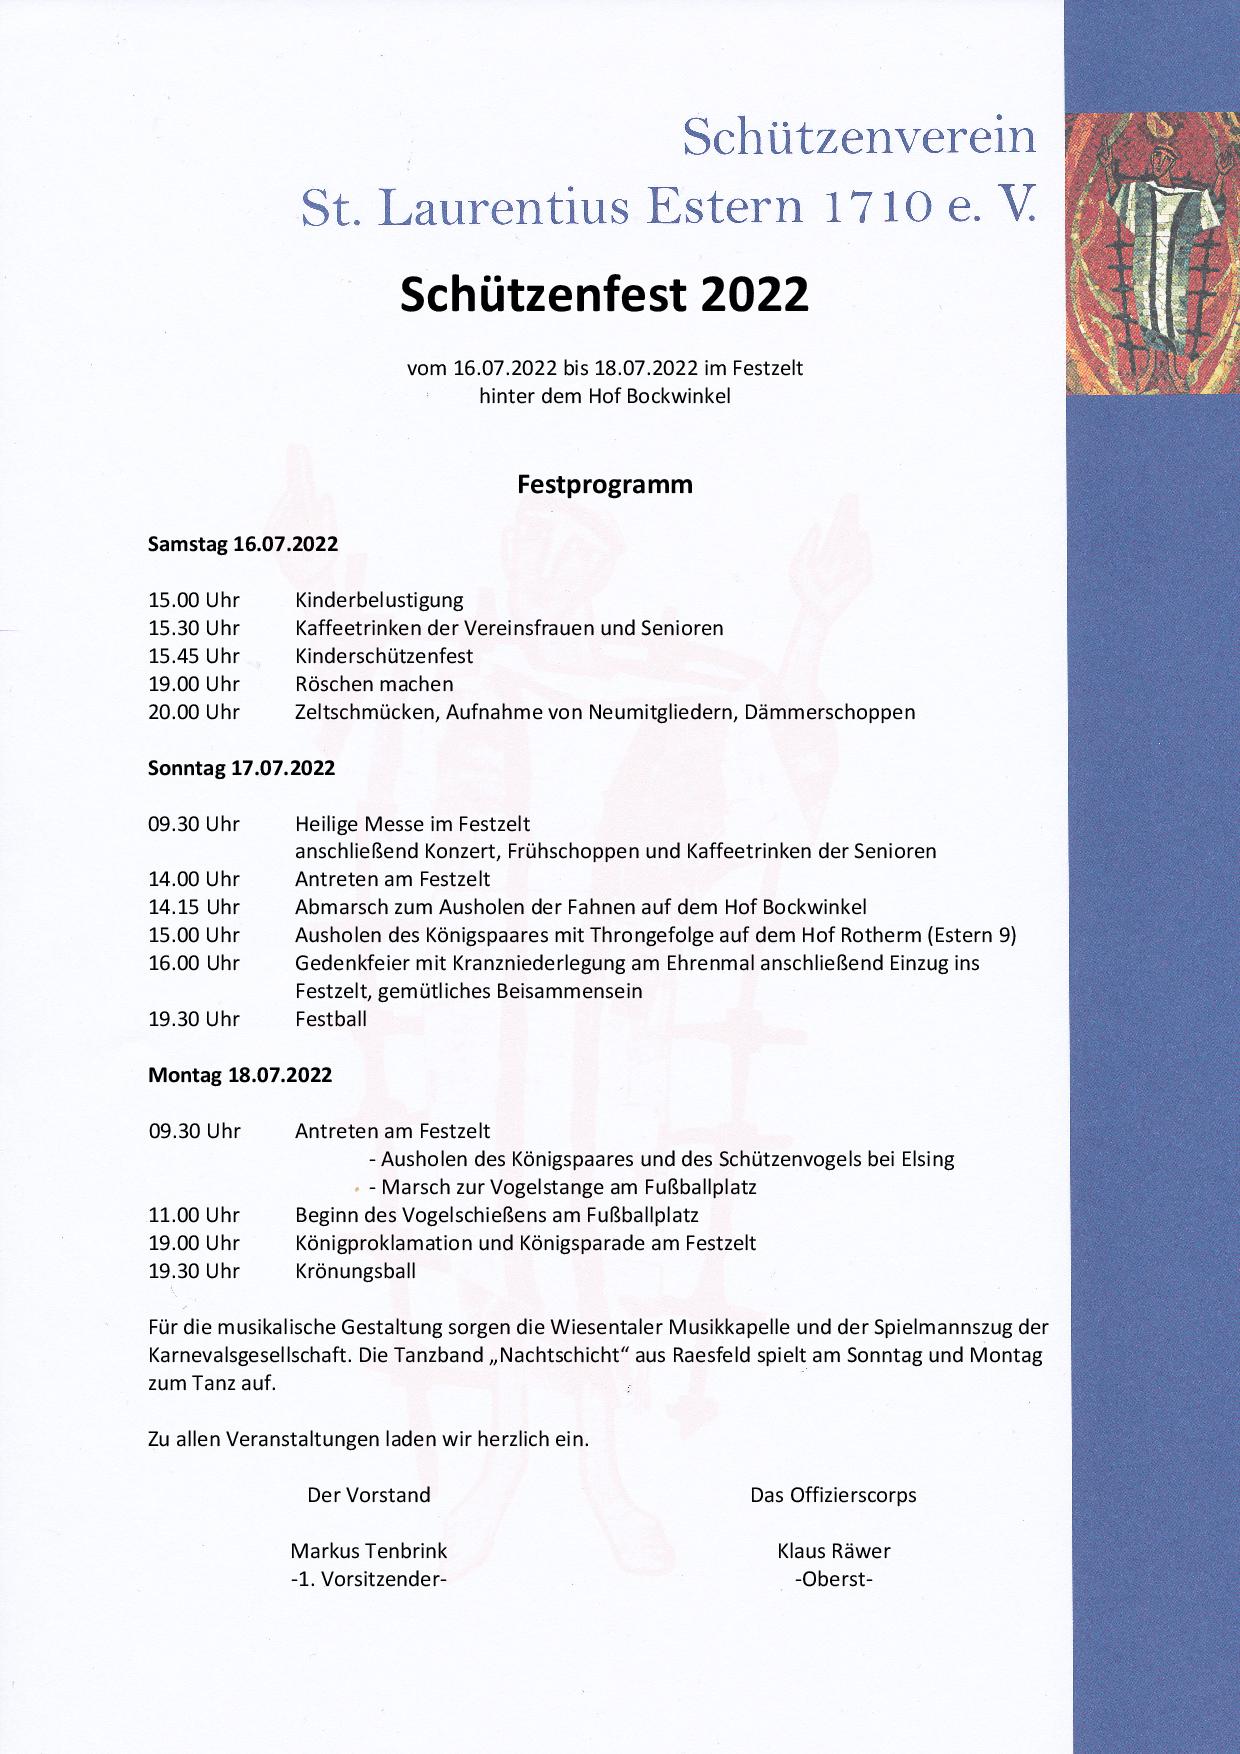 Festprogramm 2022